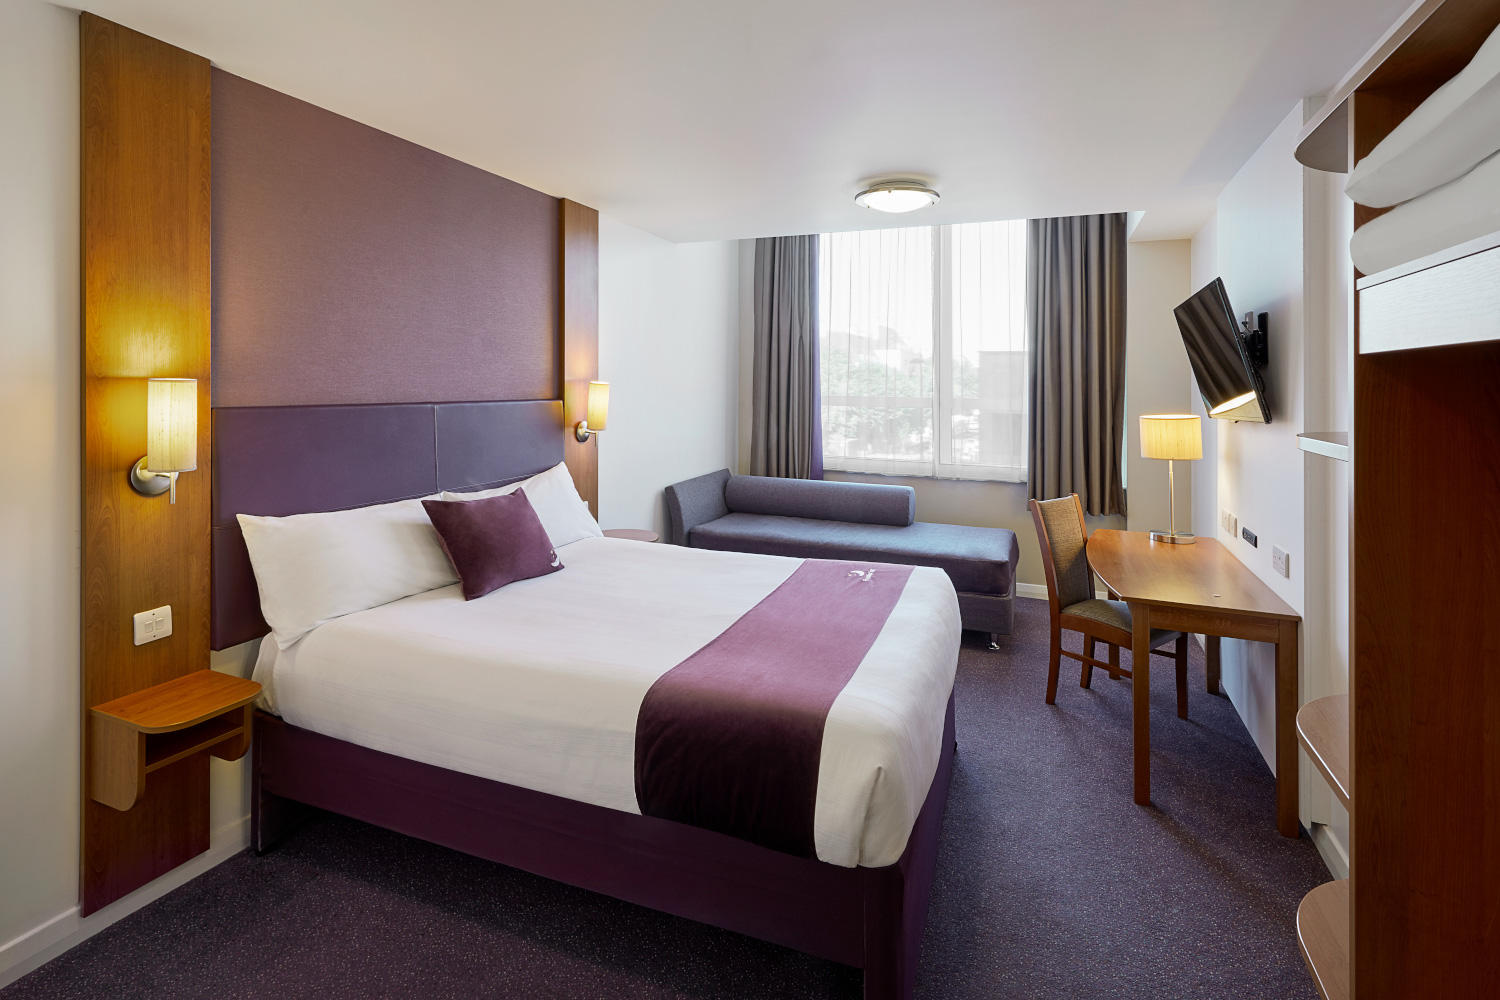 Premier Inn bedroom Premier Inn Lowestoft hotel Lowestoft 03333 211281